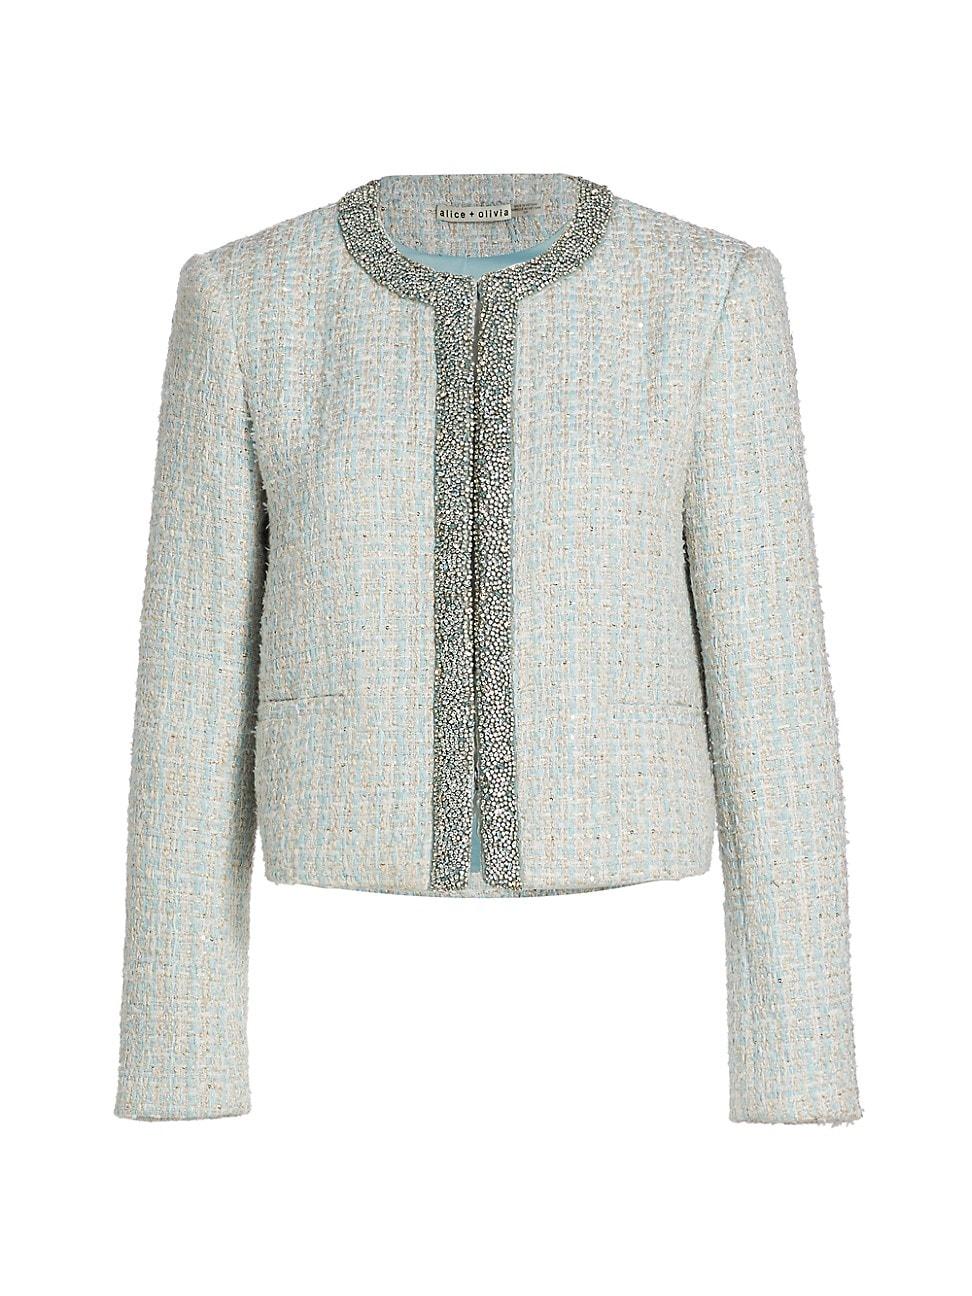 Alice + Olivia Kidman Embellished Tweed Jacket in Blue | Lyst